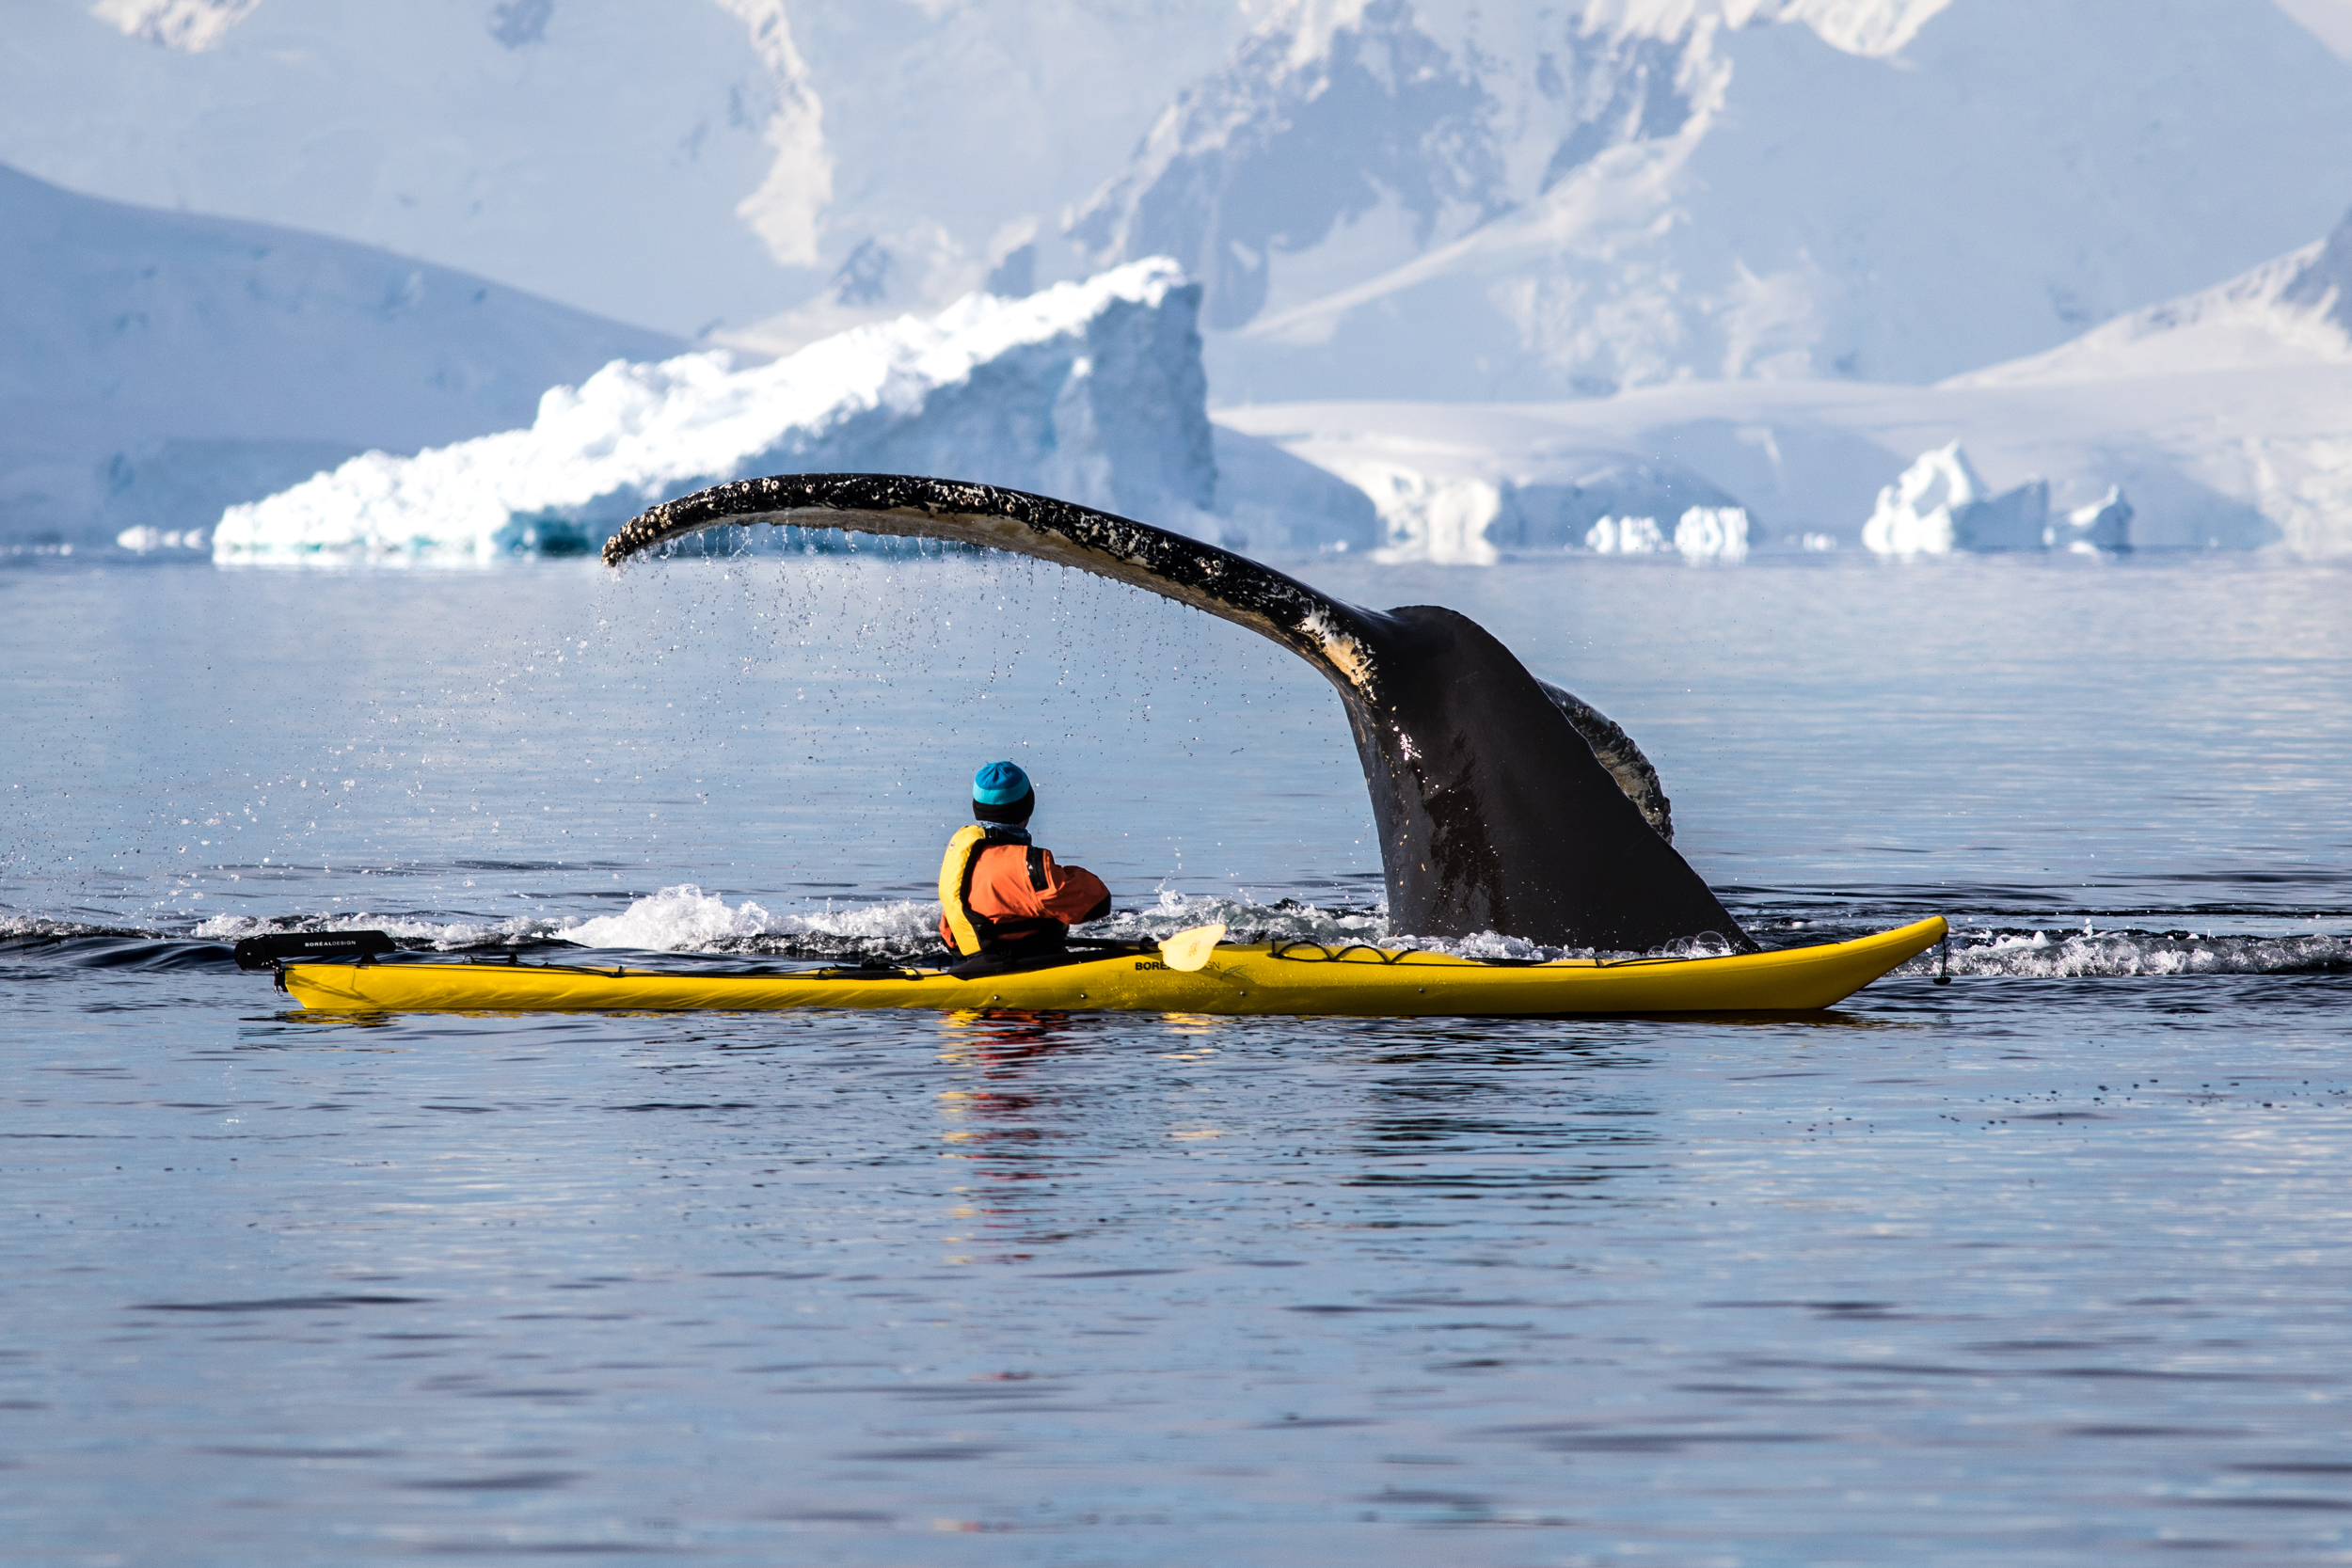  Jin &amp; Humpback Whale, Gerlache Strait. Antarctica 